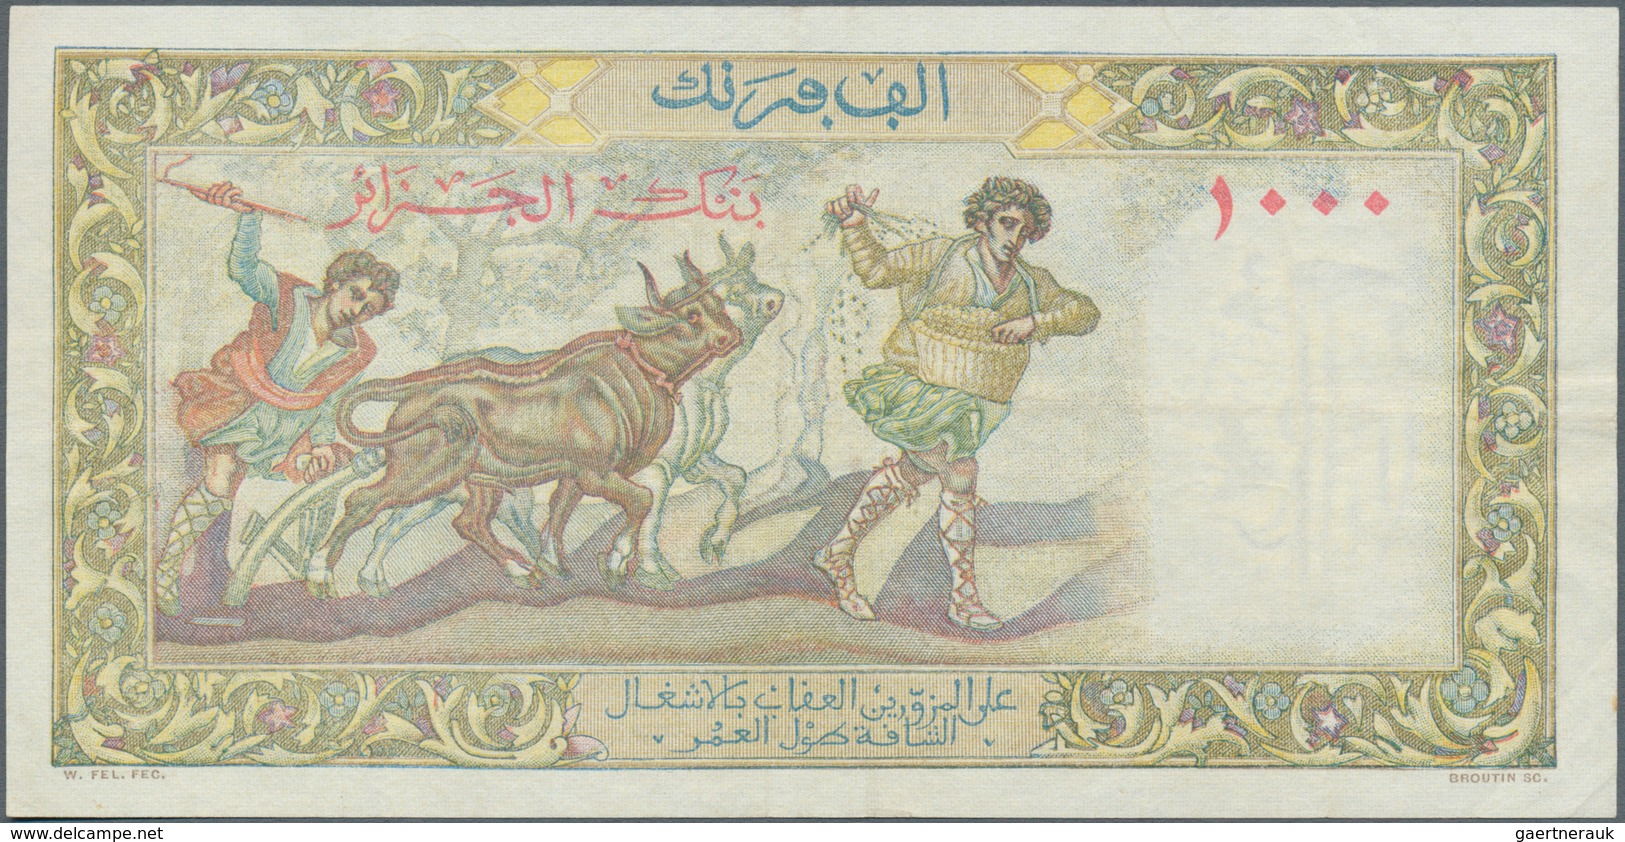 01009 Algeria / Algerien: 1000 Francs 1947 P. 104, Light Folds In Paper, No Holes, Still Nice Colors And S - Algeria